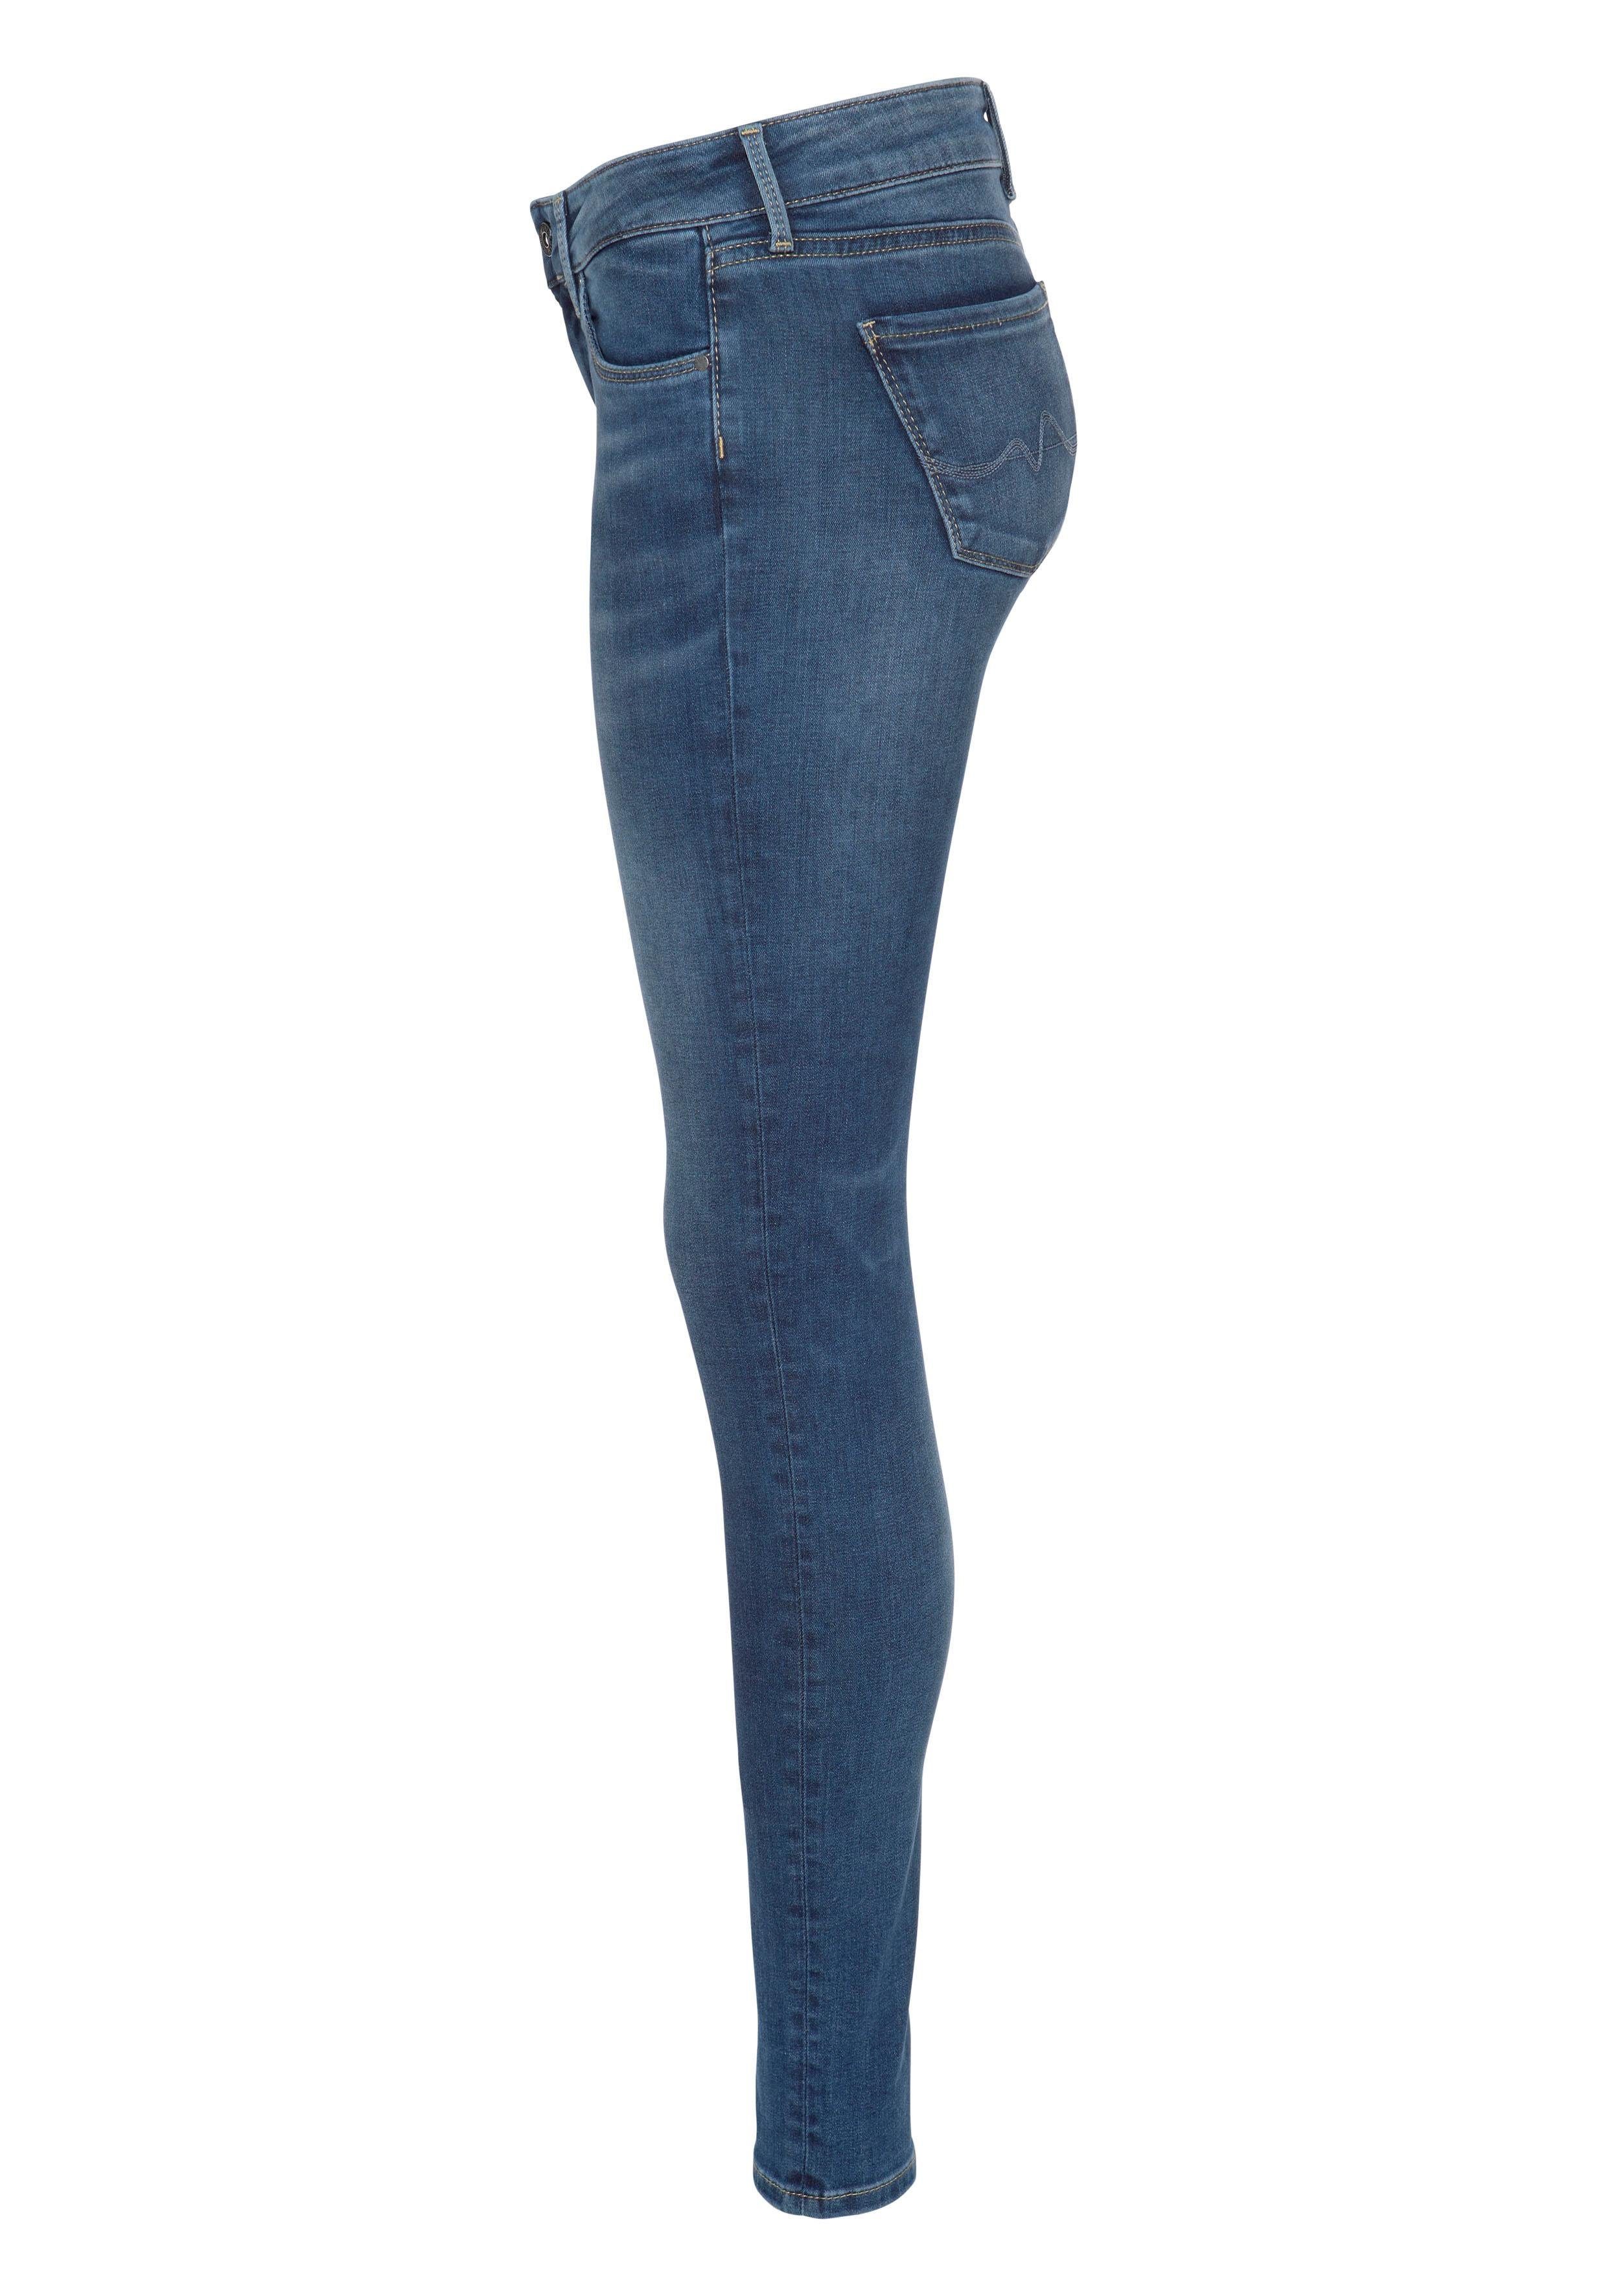 Damen Jeans Pepe Jeans Skinny-fit-Jeans SOHO im 5-Pocket-Stil mit 1-Knopf Bund und Stretch-Anteil